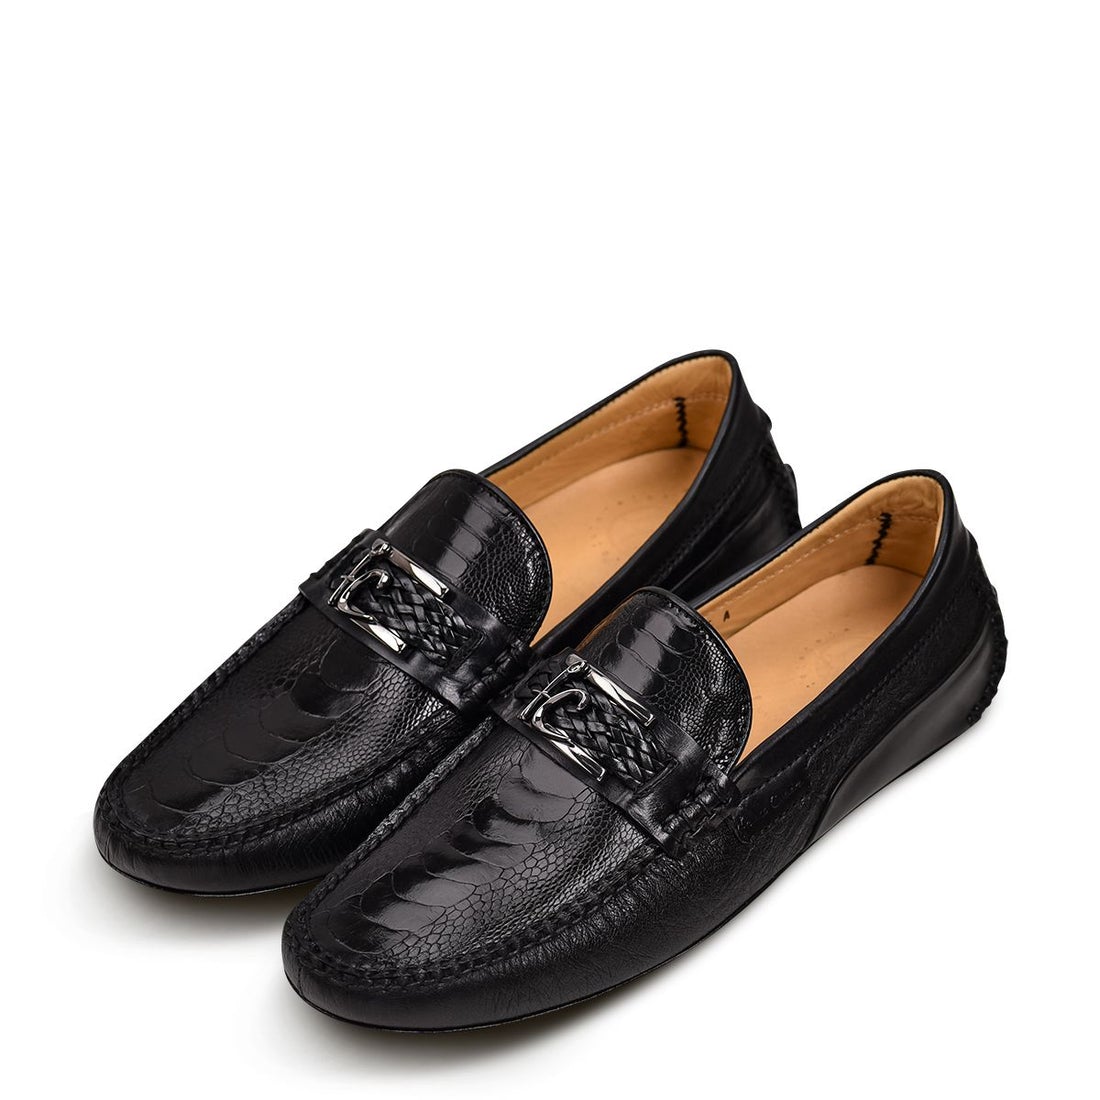 36VPTPA - Cuadra black casual fashion ostrich leg drivers for men-Kuet.us